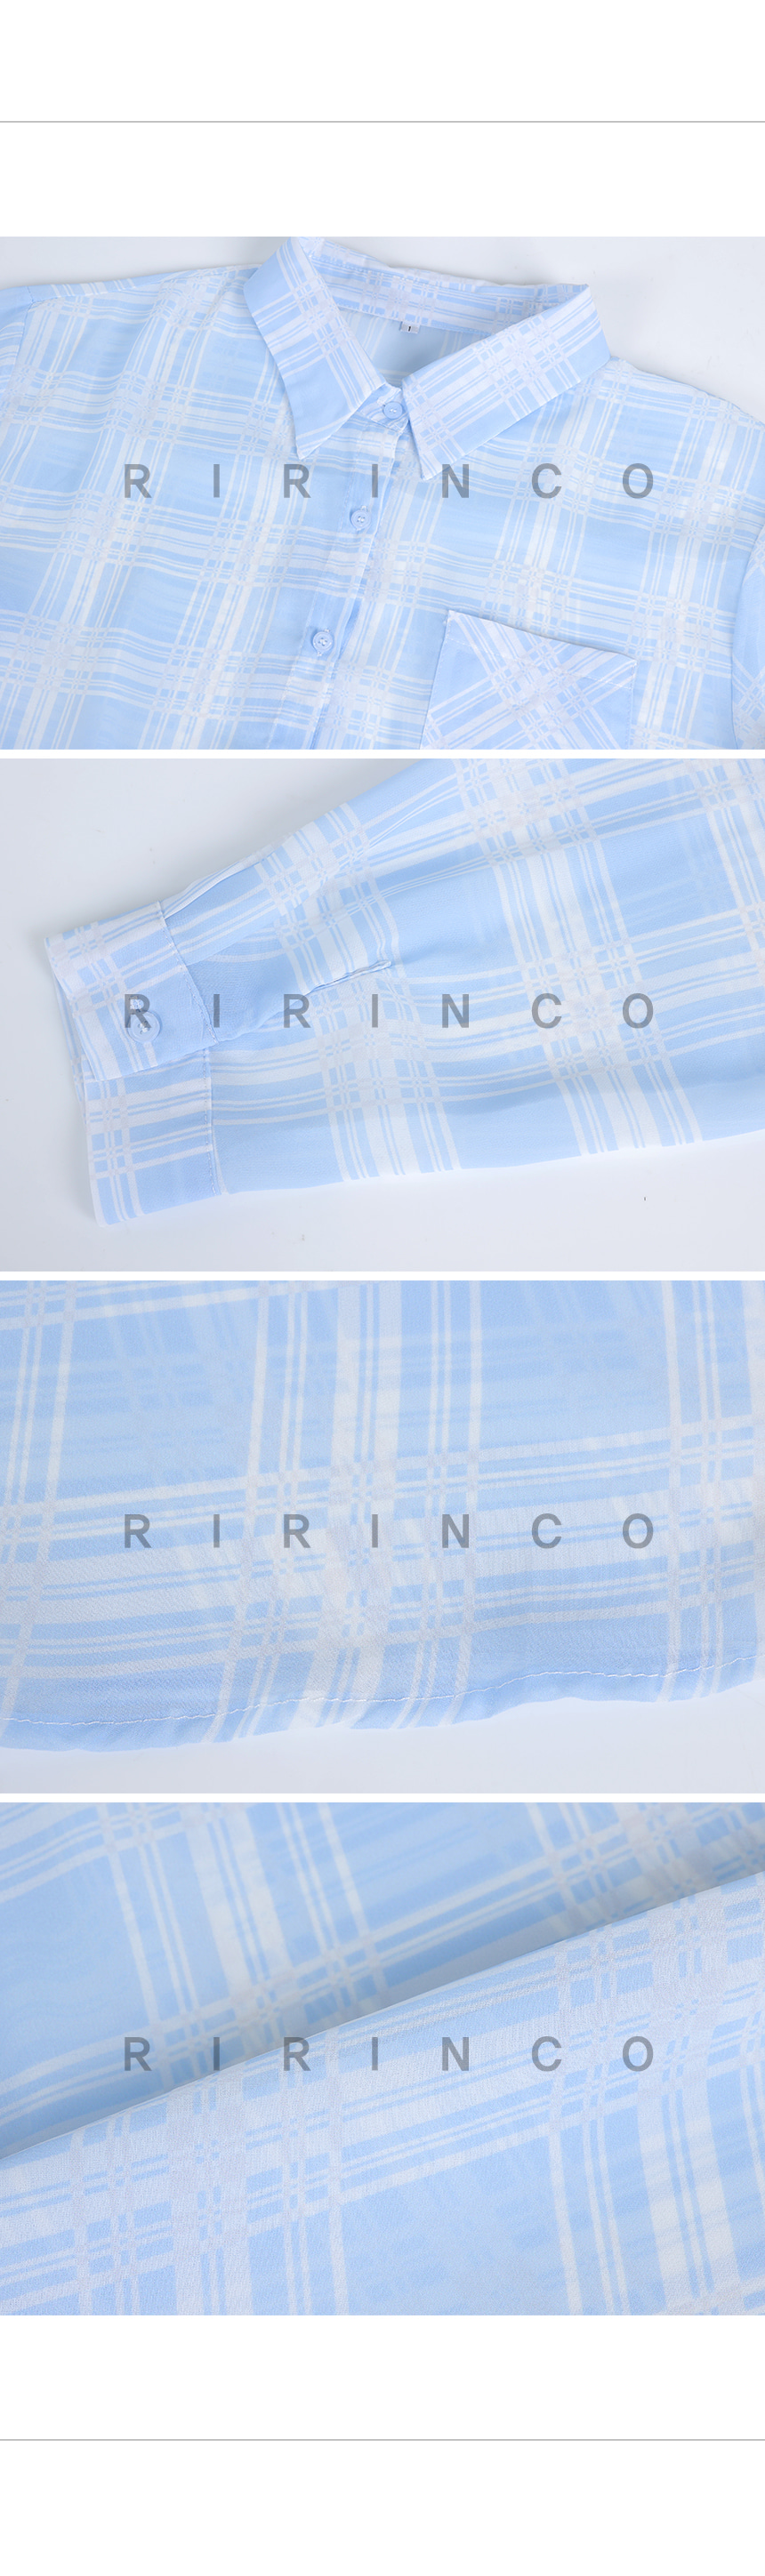 RIRINCO シースルータータンチェックシャツ